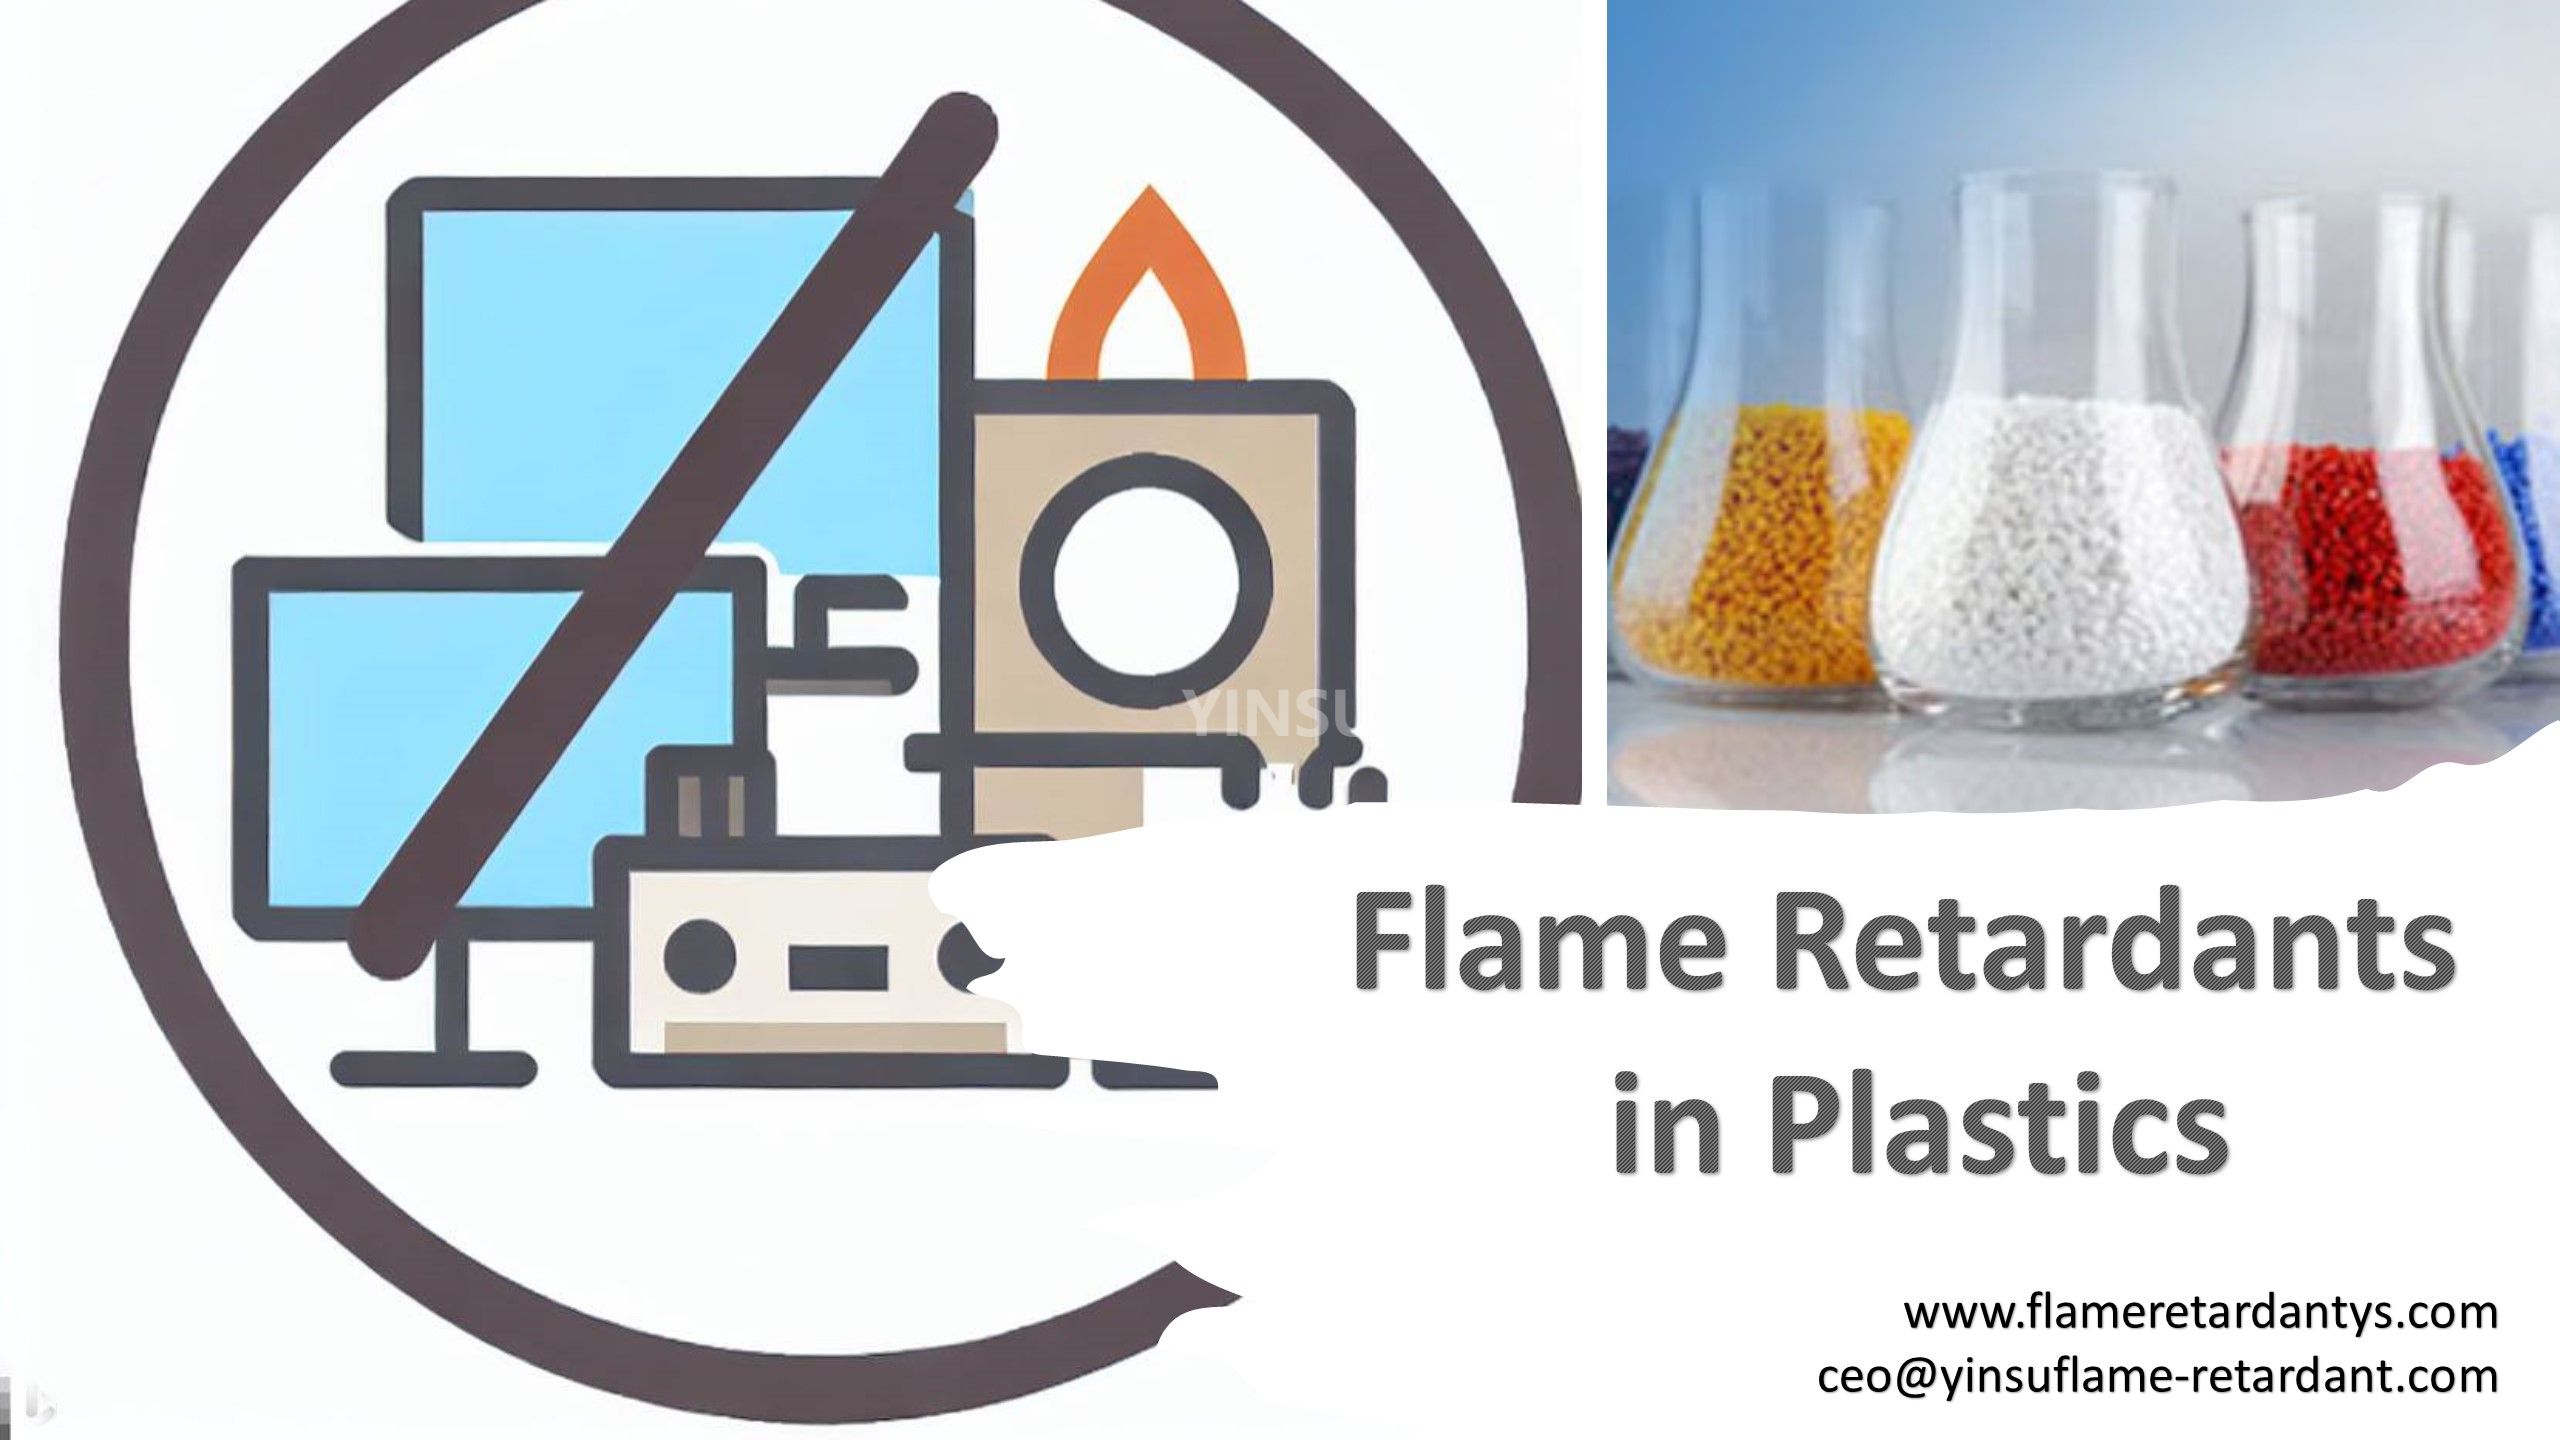 Flame Retardants in Plastics